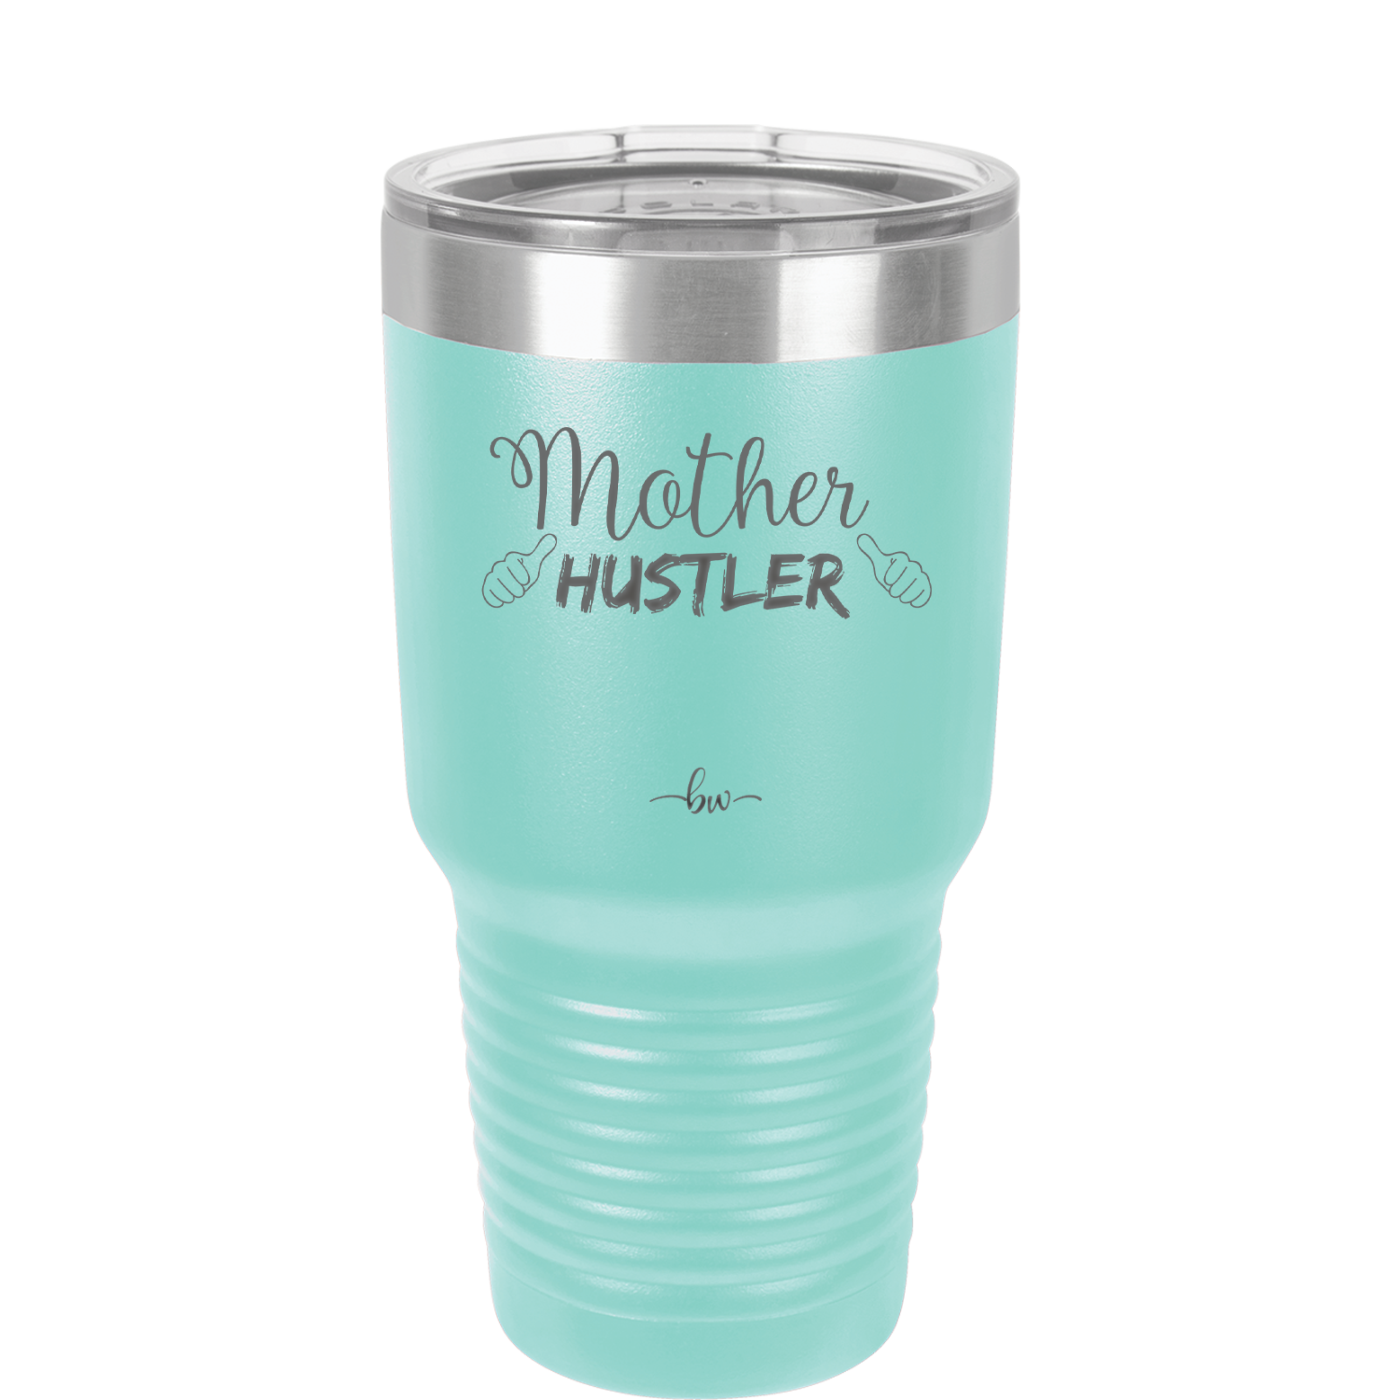 Mother Hustler - Laser Engraved Stainless Steel Drinkware - 1986 -